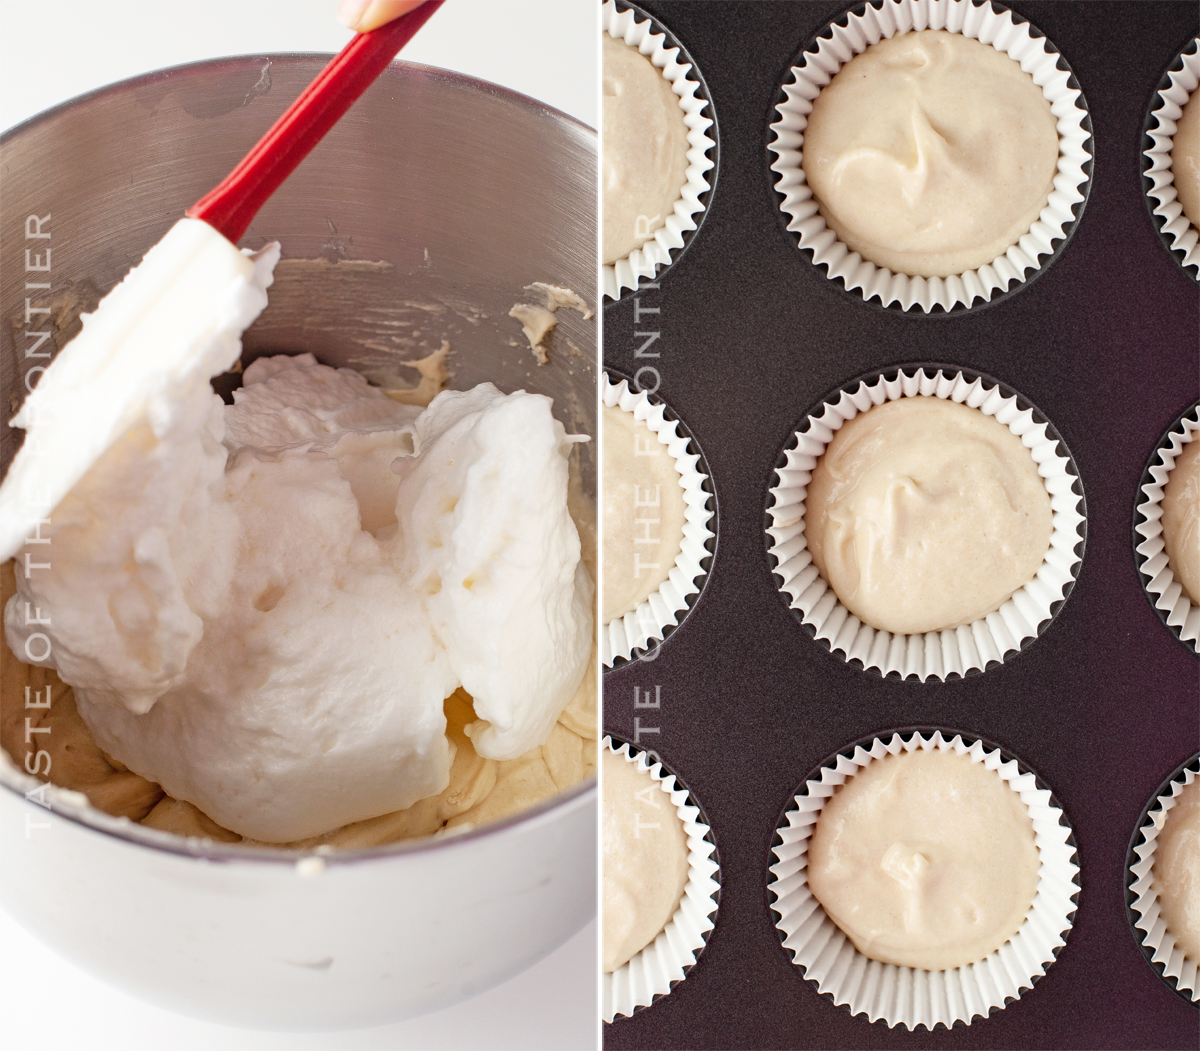 making white chocolate cupcakes